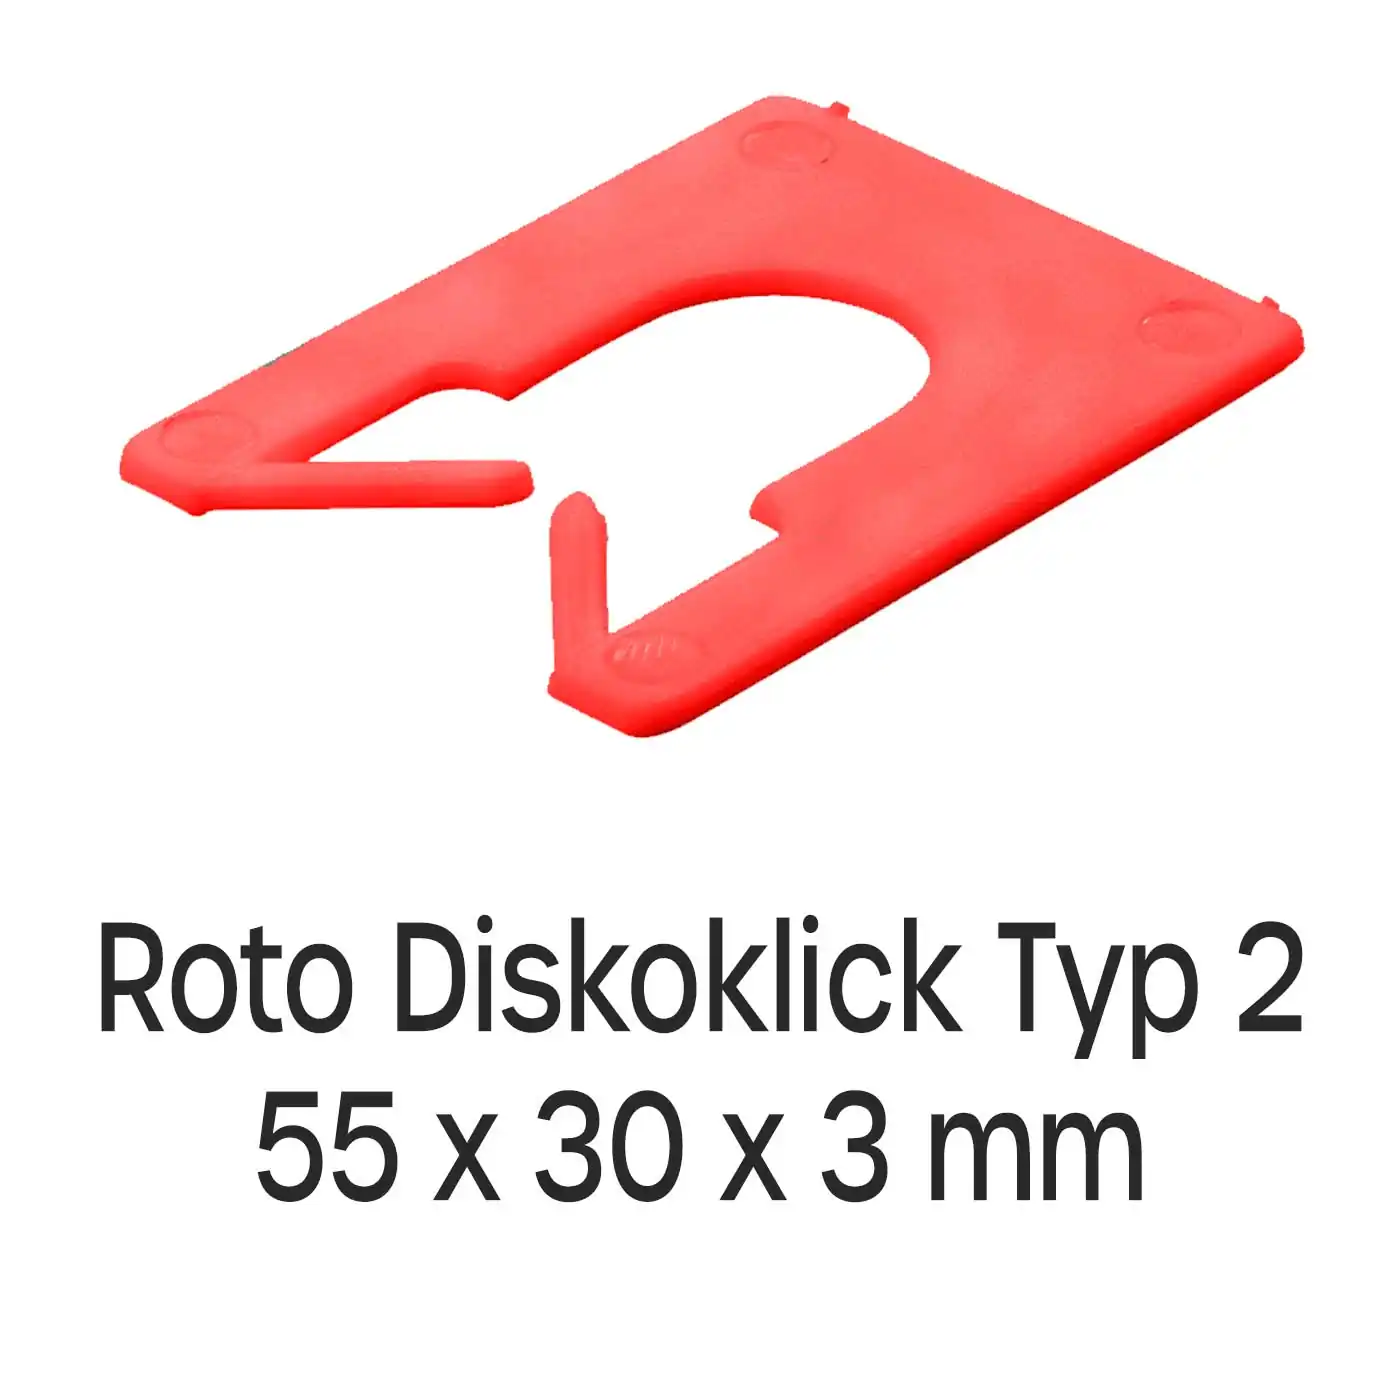 Distanzplatten Roto Diskoklick Typ 2 55 x 30 x 3 mm 1000 Stück